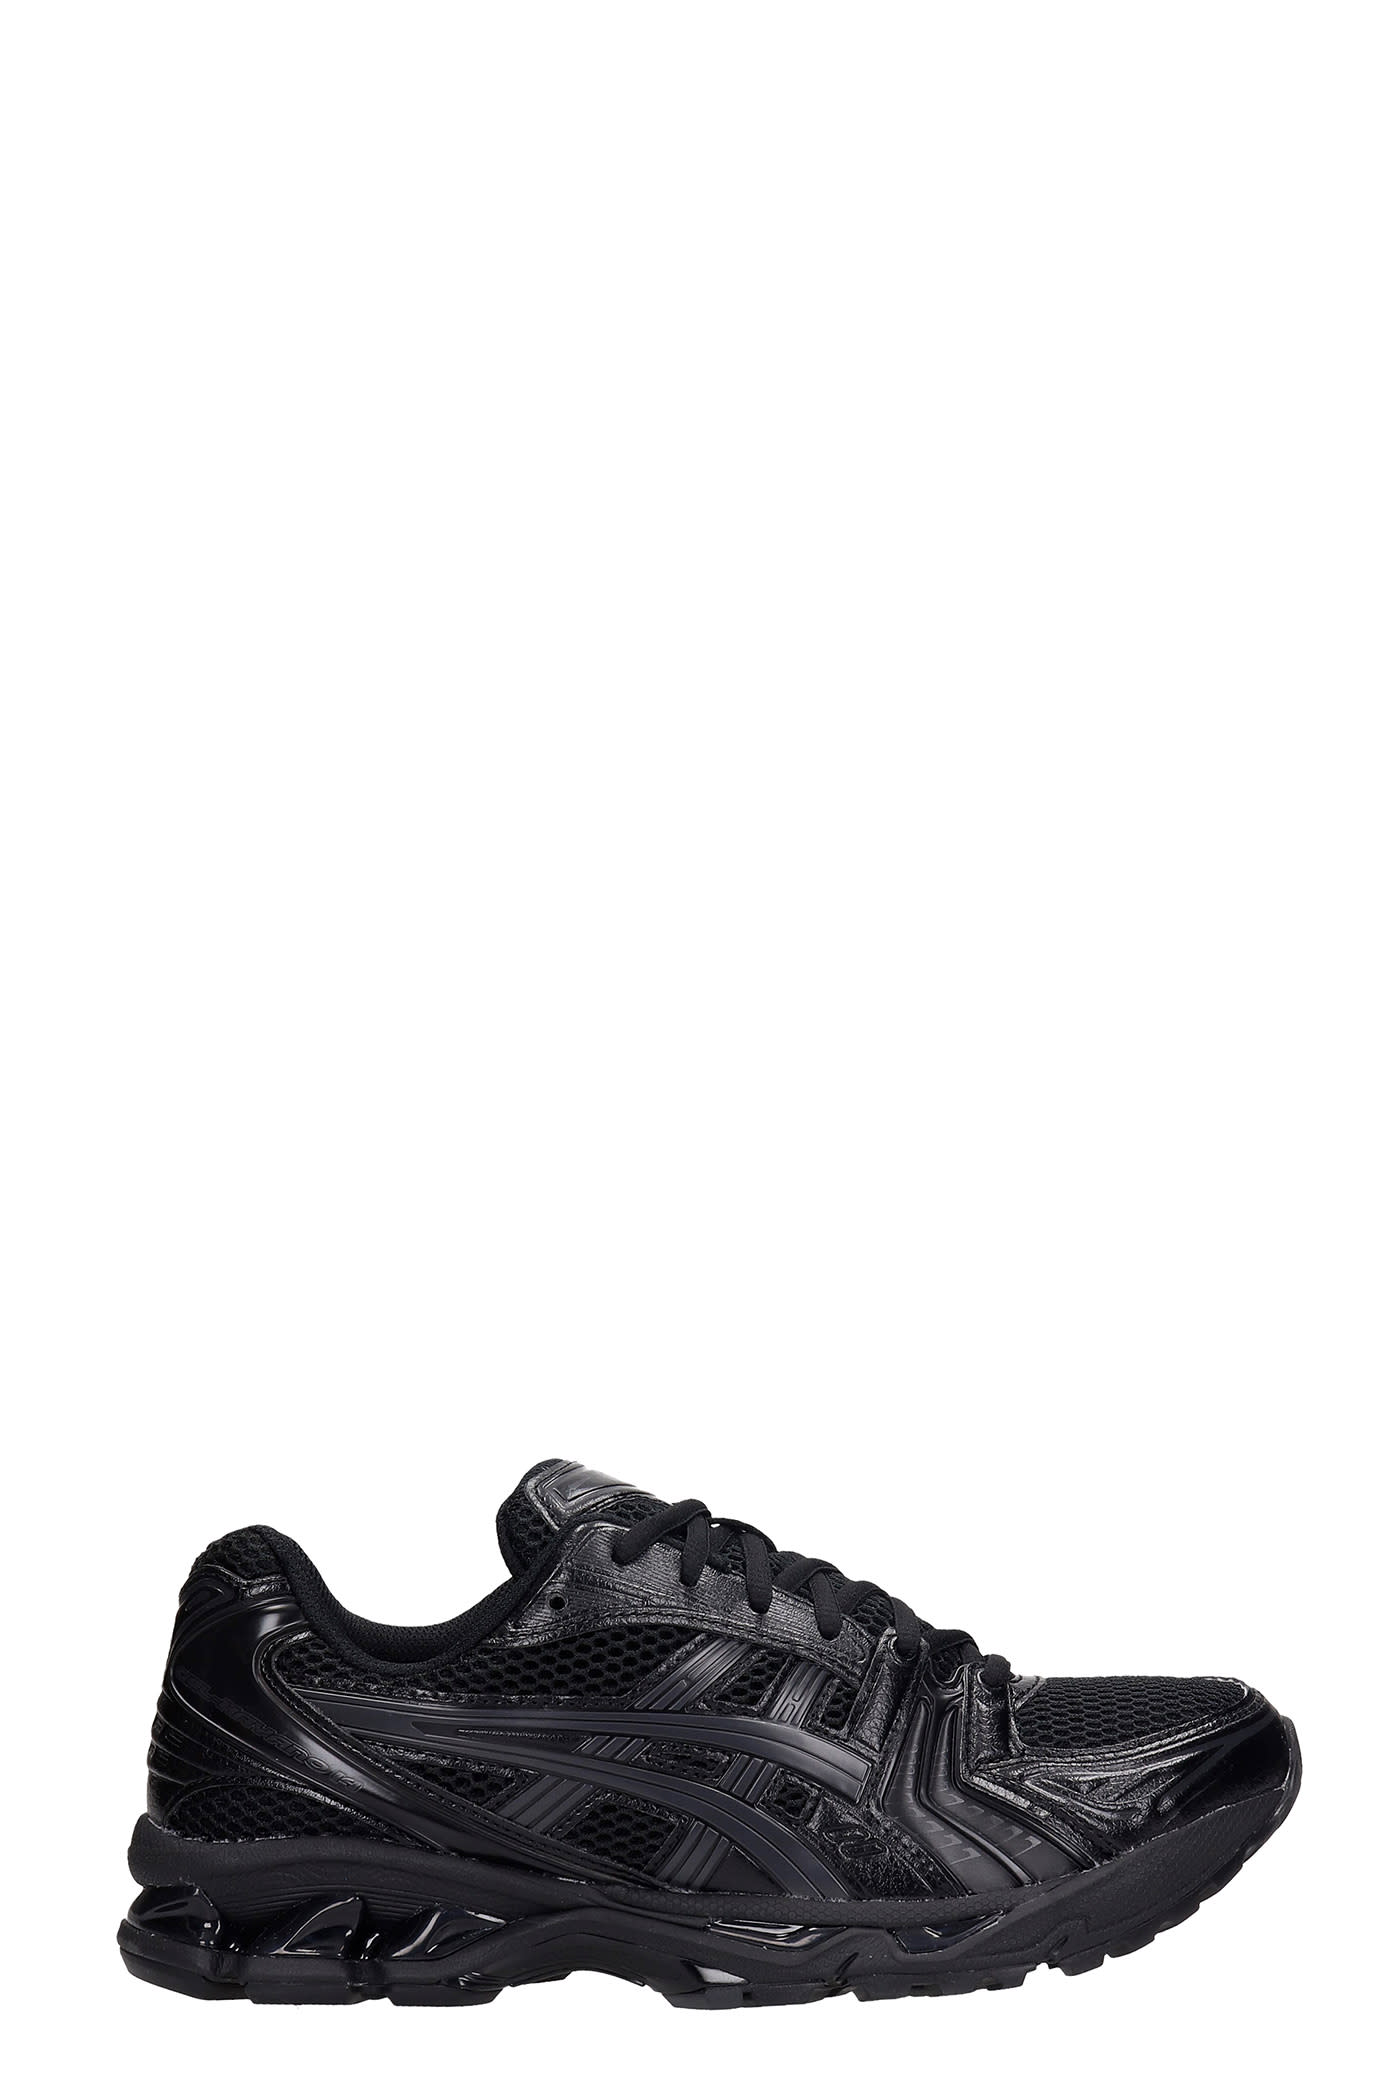 Asics Gel-kayano 14 Sneakers In Black Synthetic Fibers